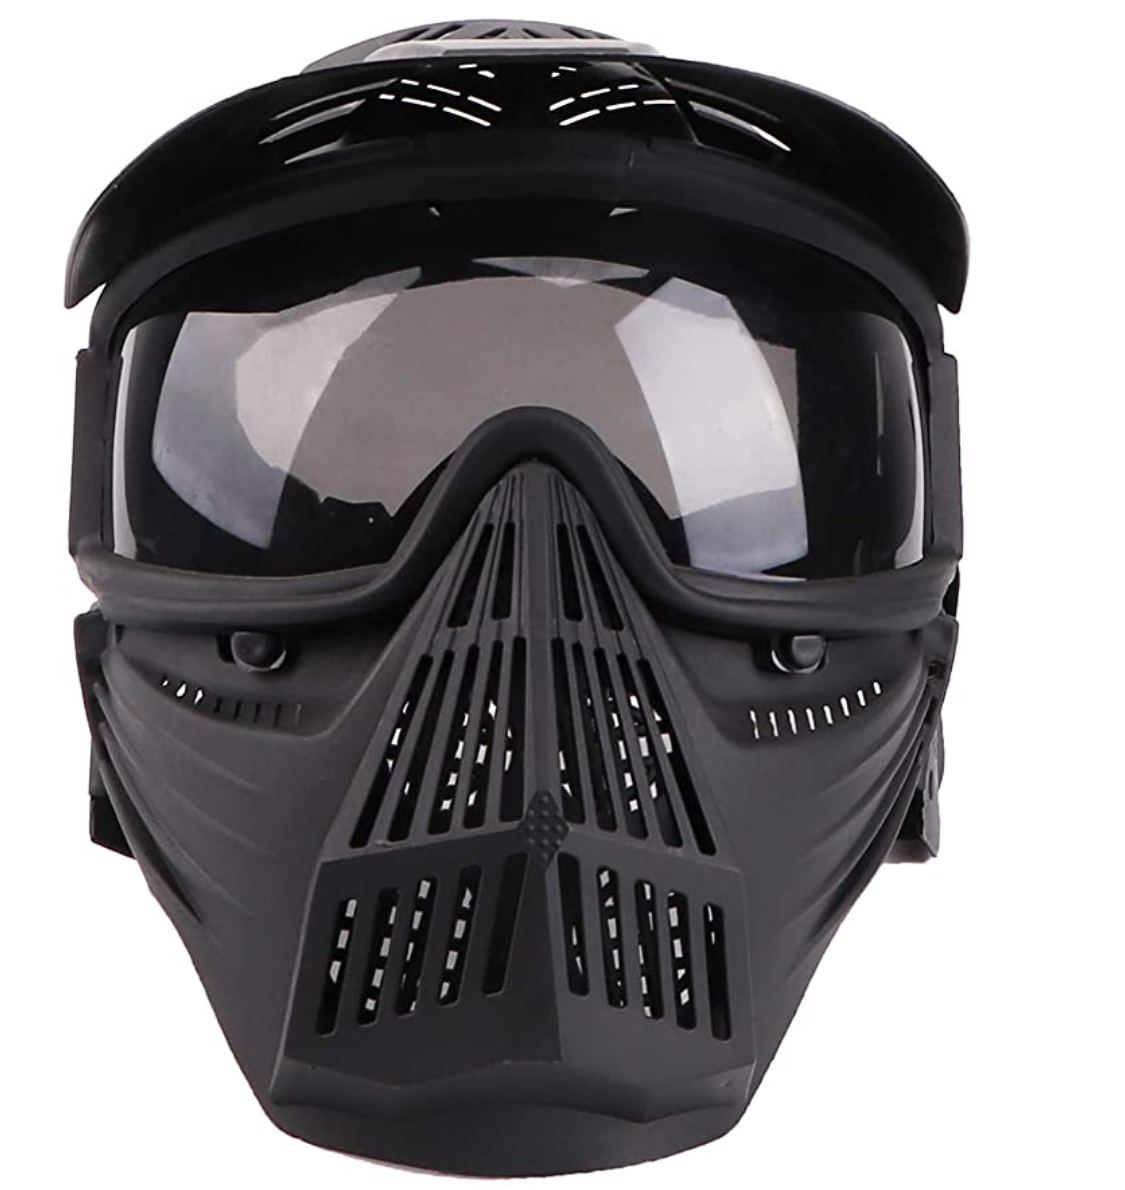 Senmortar Airsoft Mask Full Face Tactical Masks Protection Gear